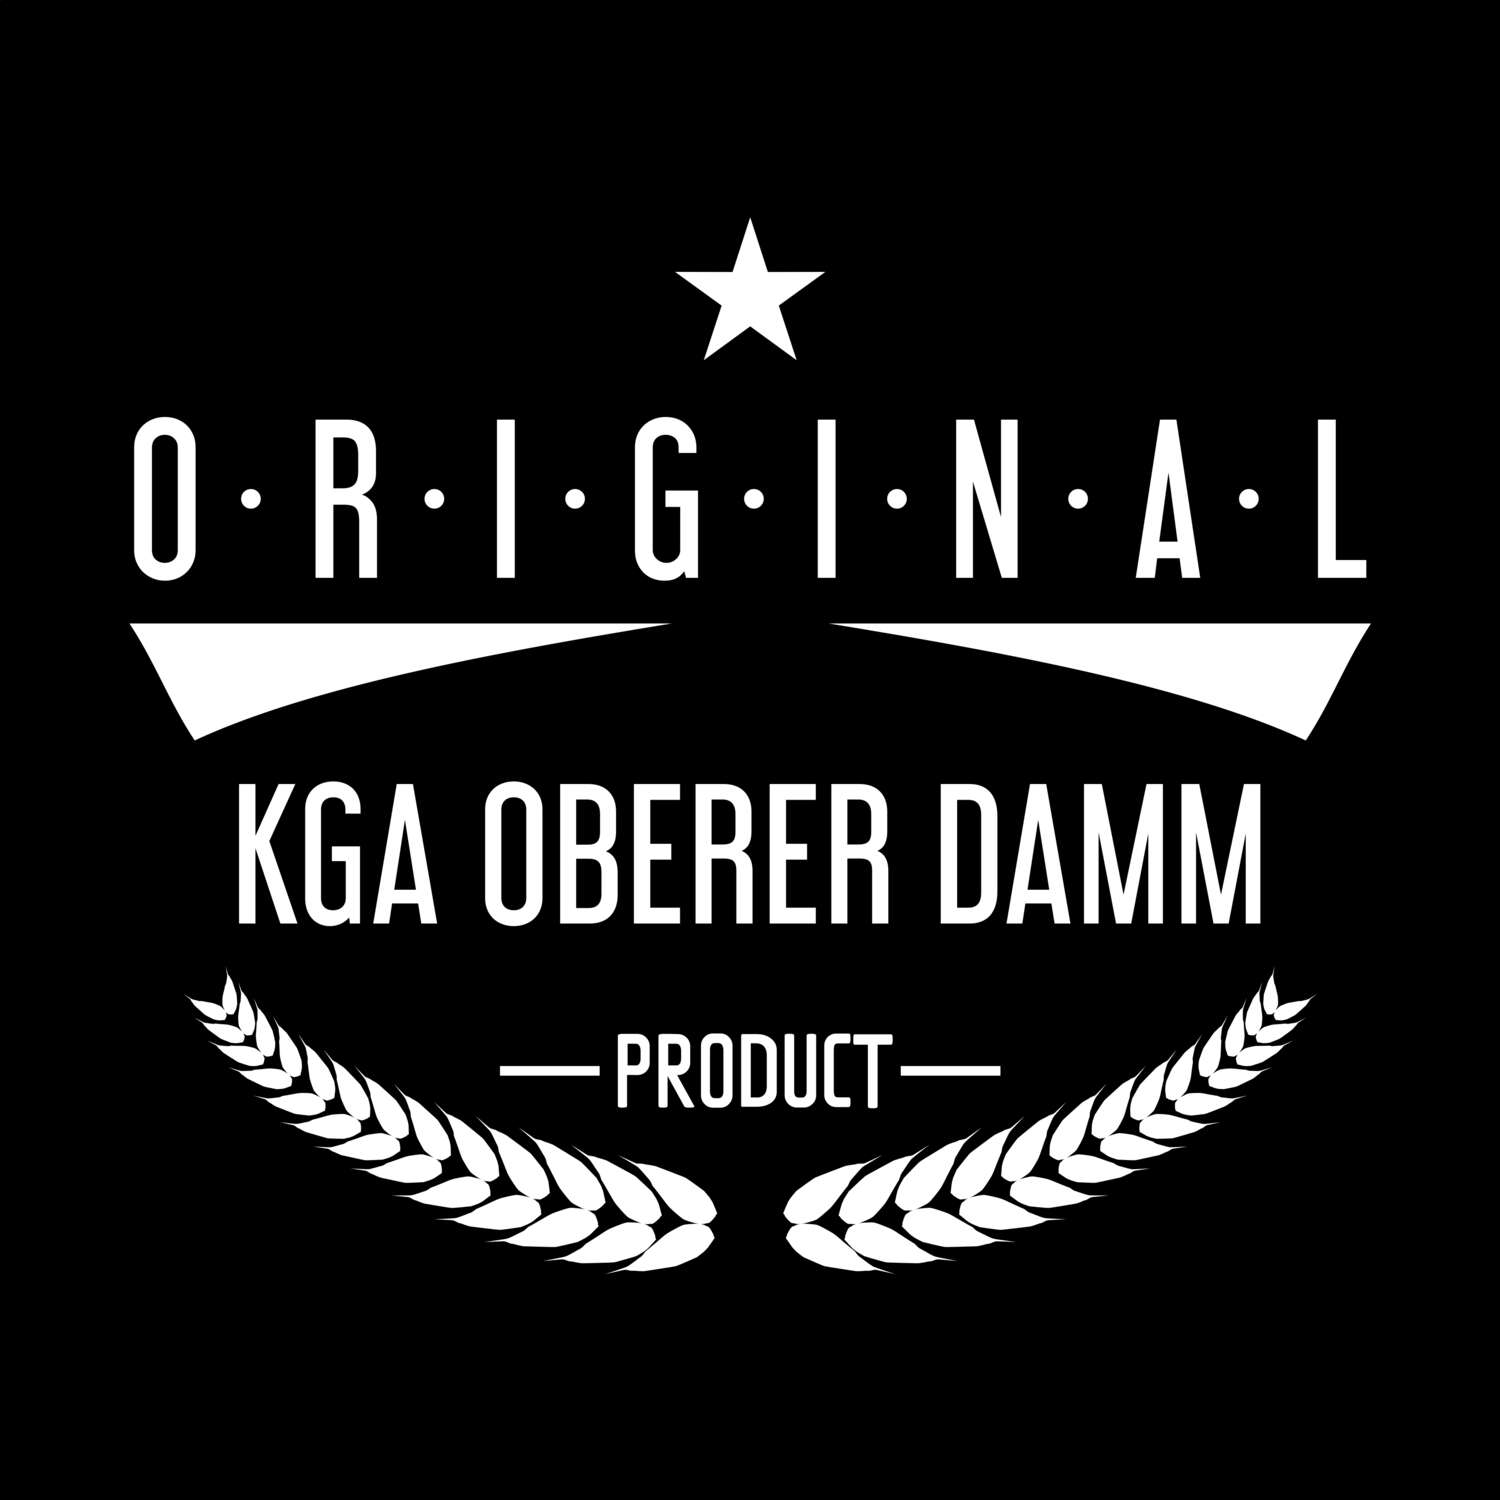 KGA Oberer Damm T-Shirt »Original Product«